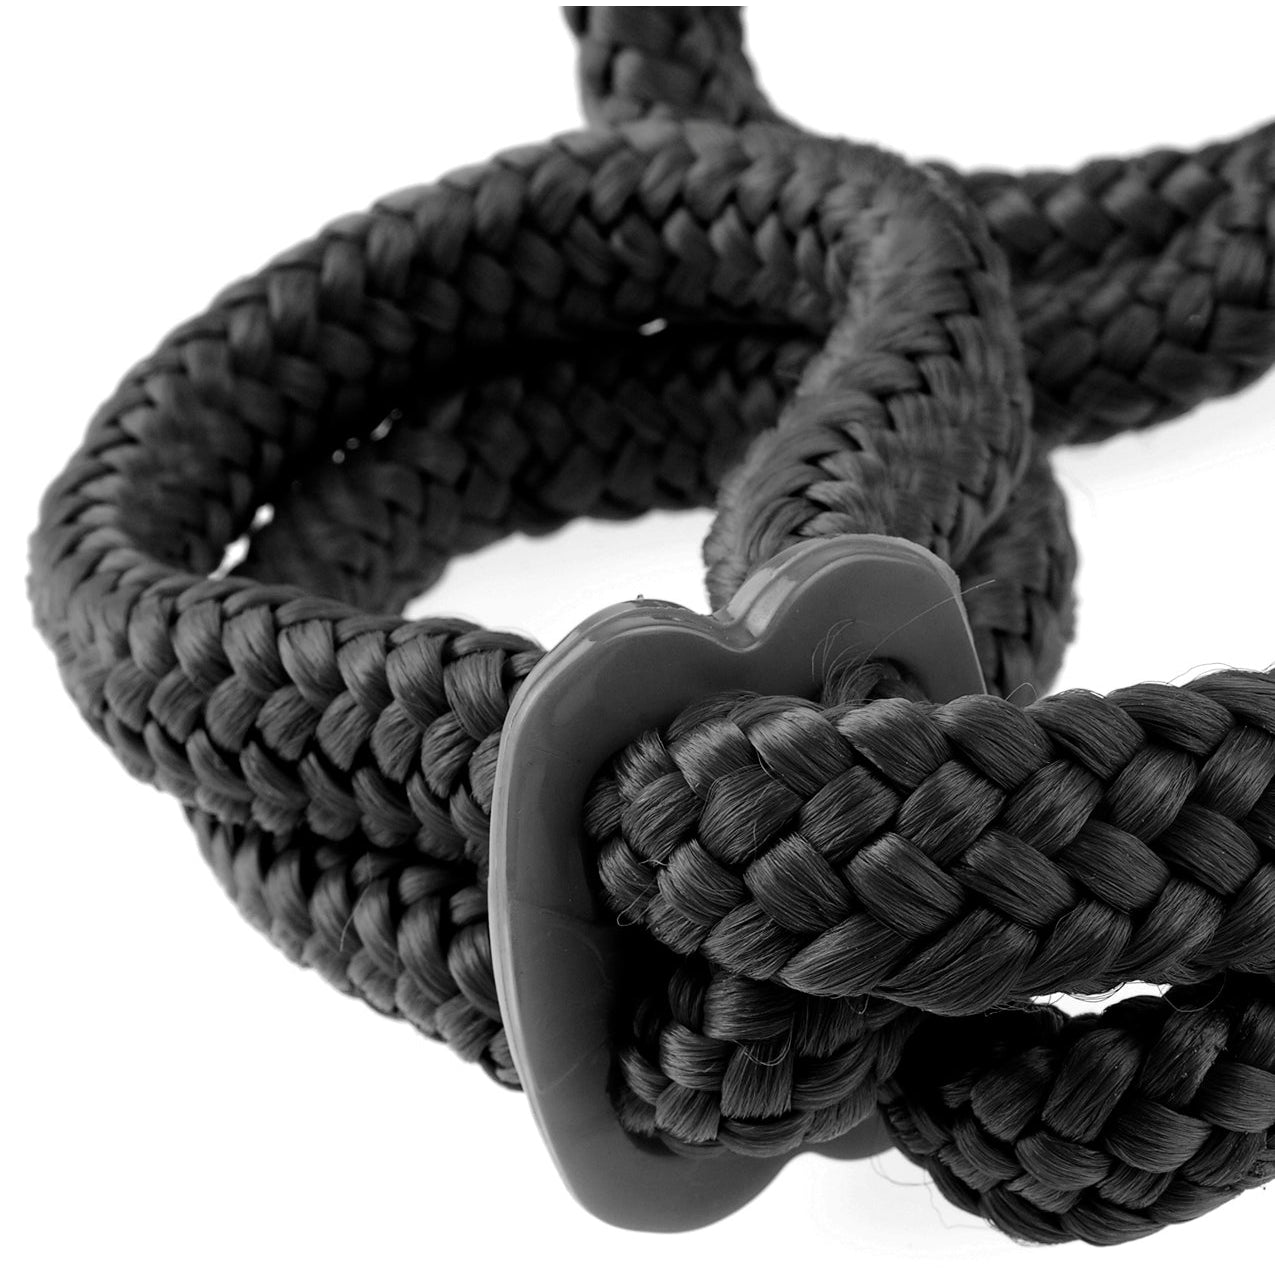 Fetish Fantasy Series Silk Rope Love Cuffs - Black